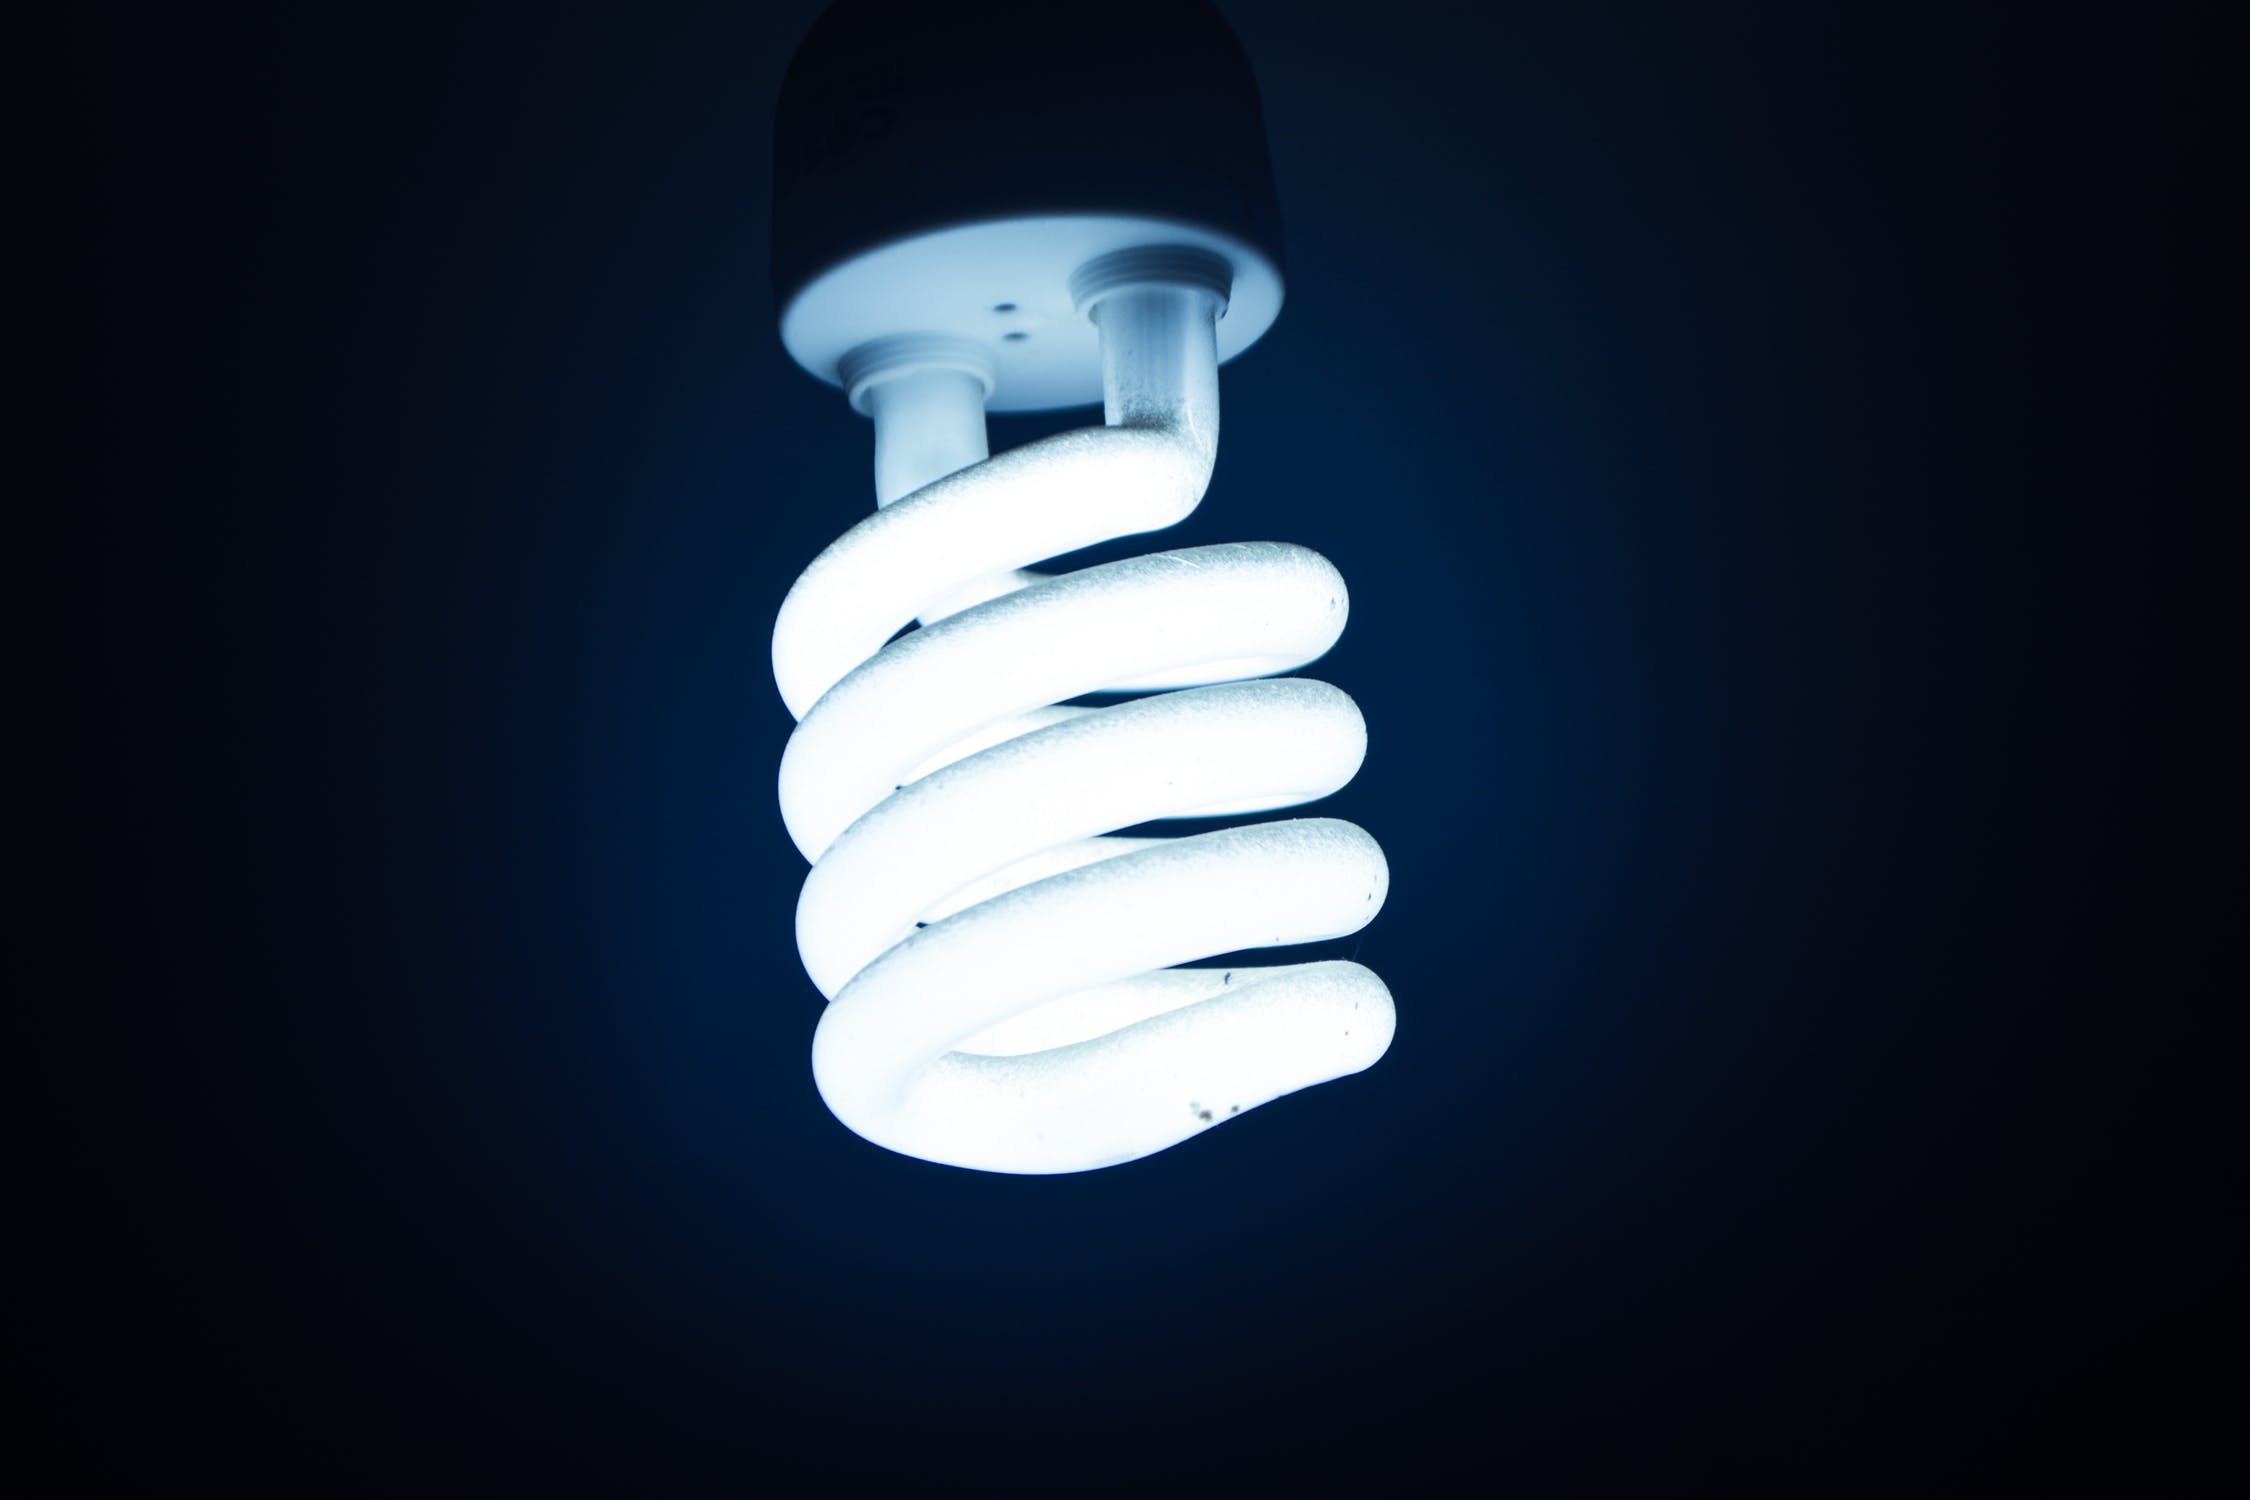 LED bulb more energy efficient